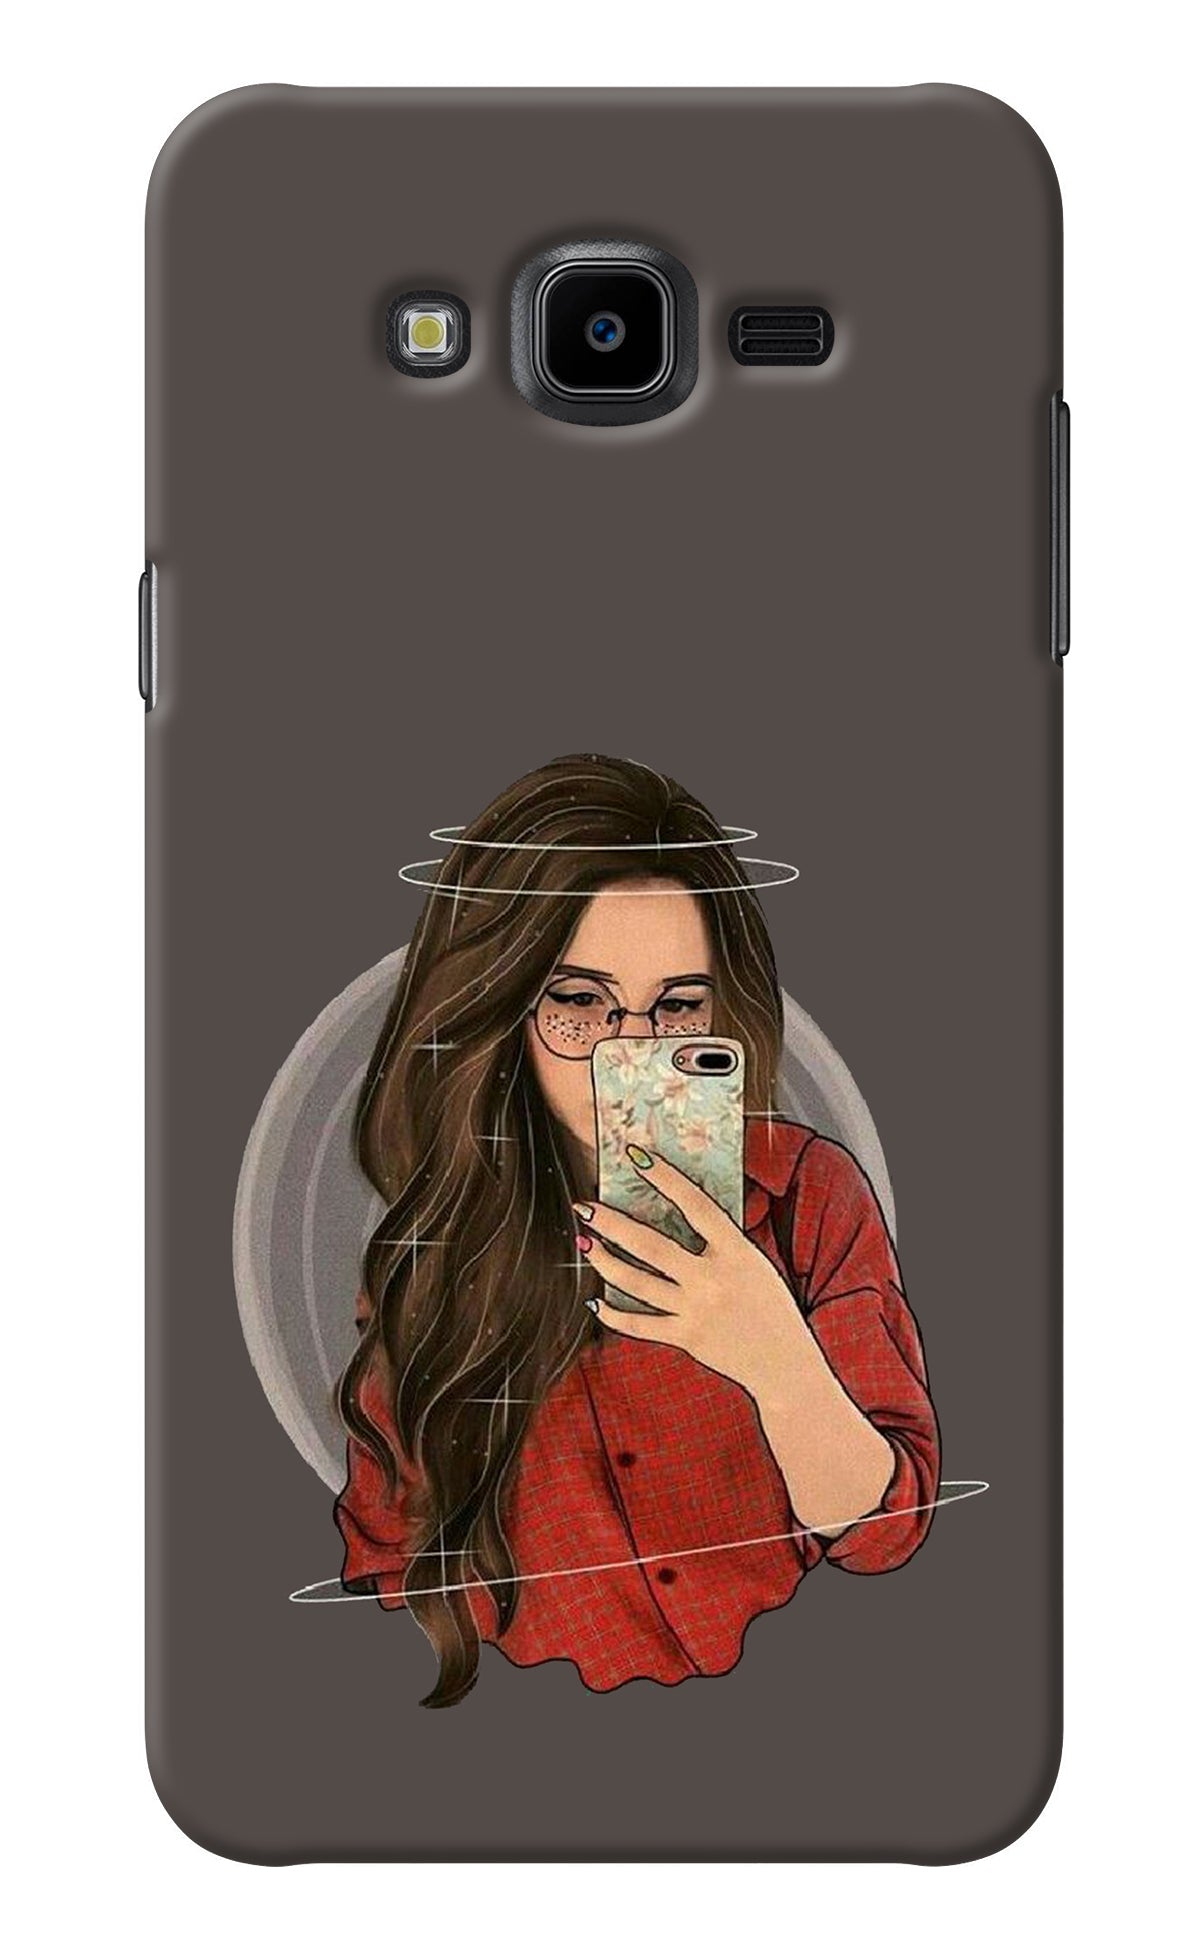 Selfie Queen Samsung J7 Nxt Back Cover